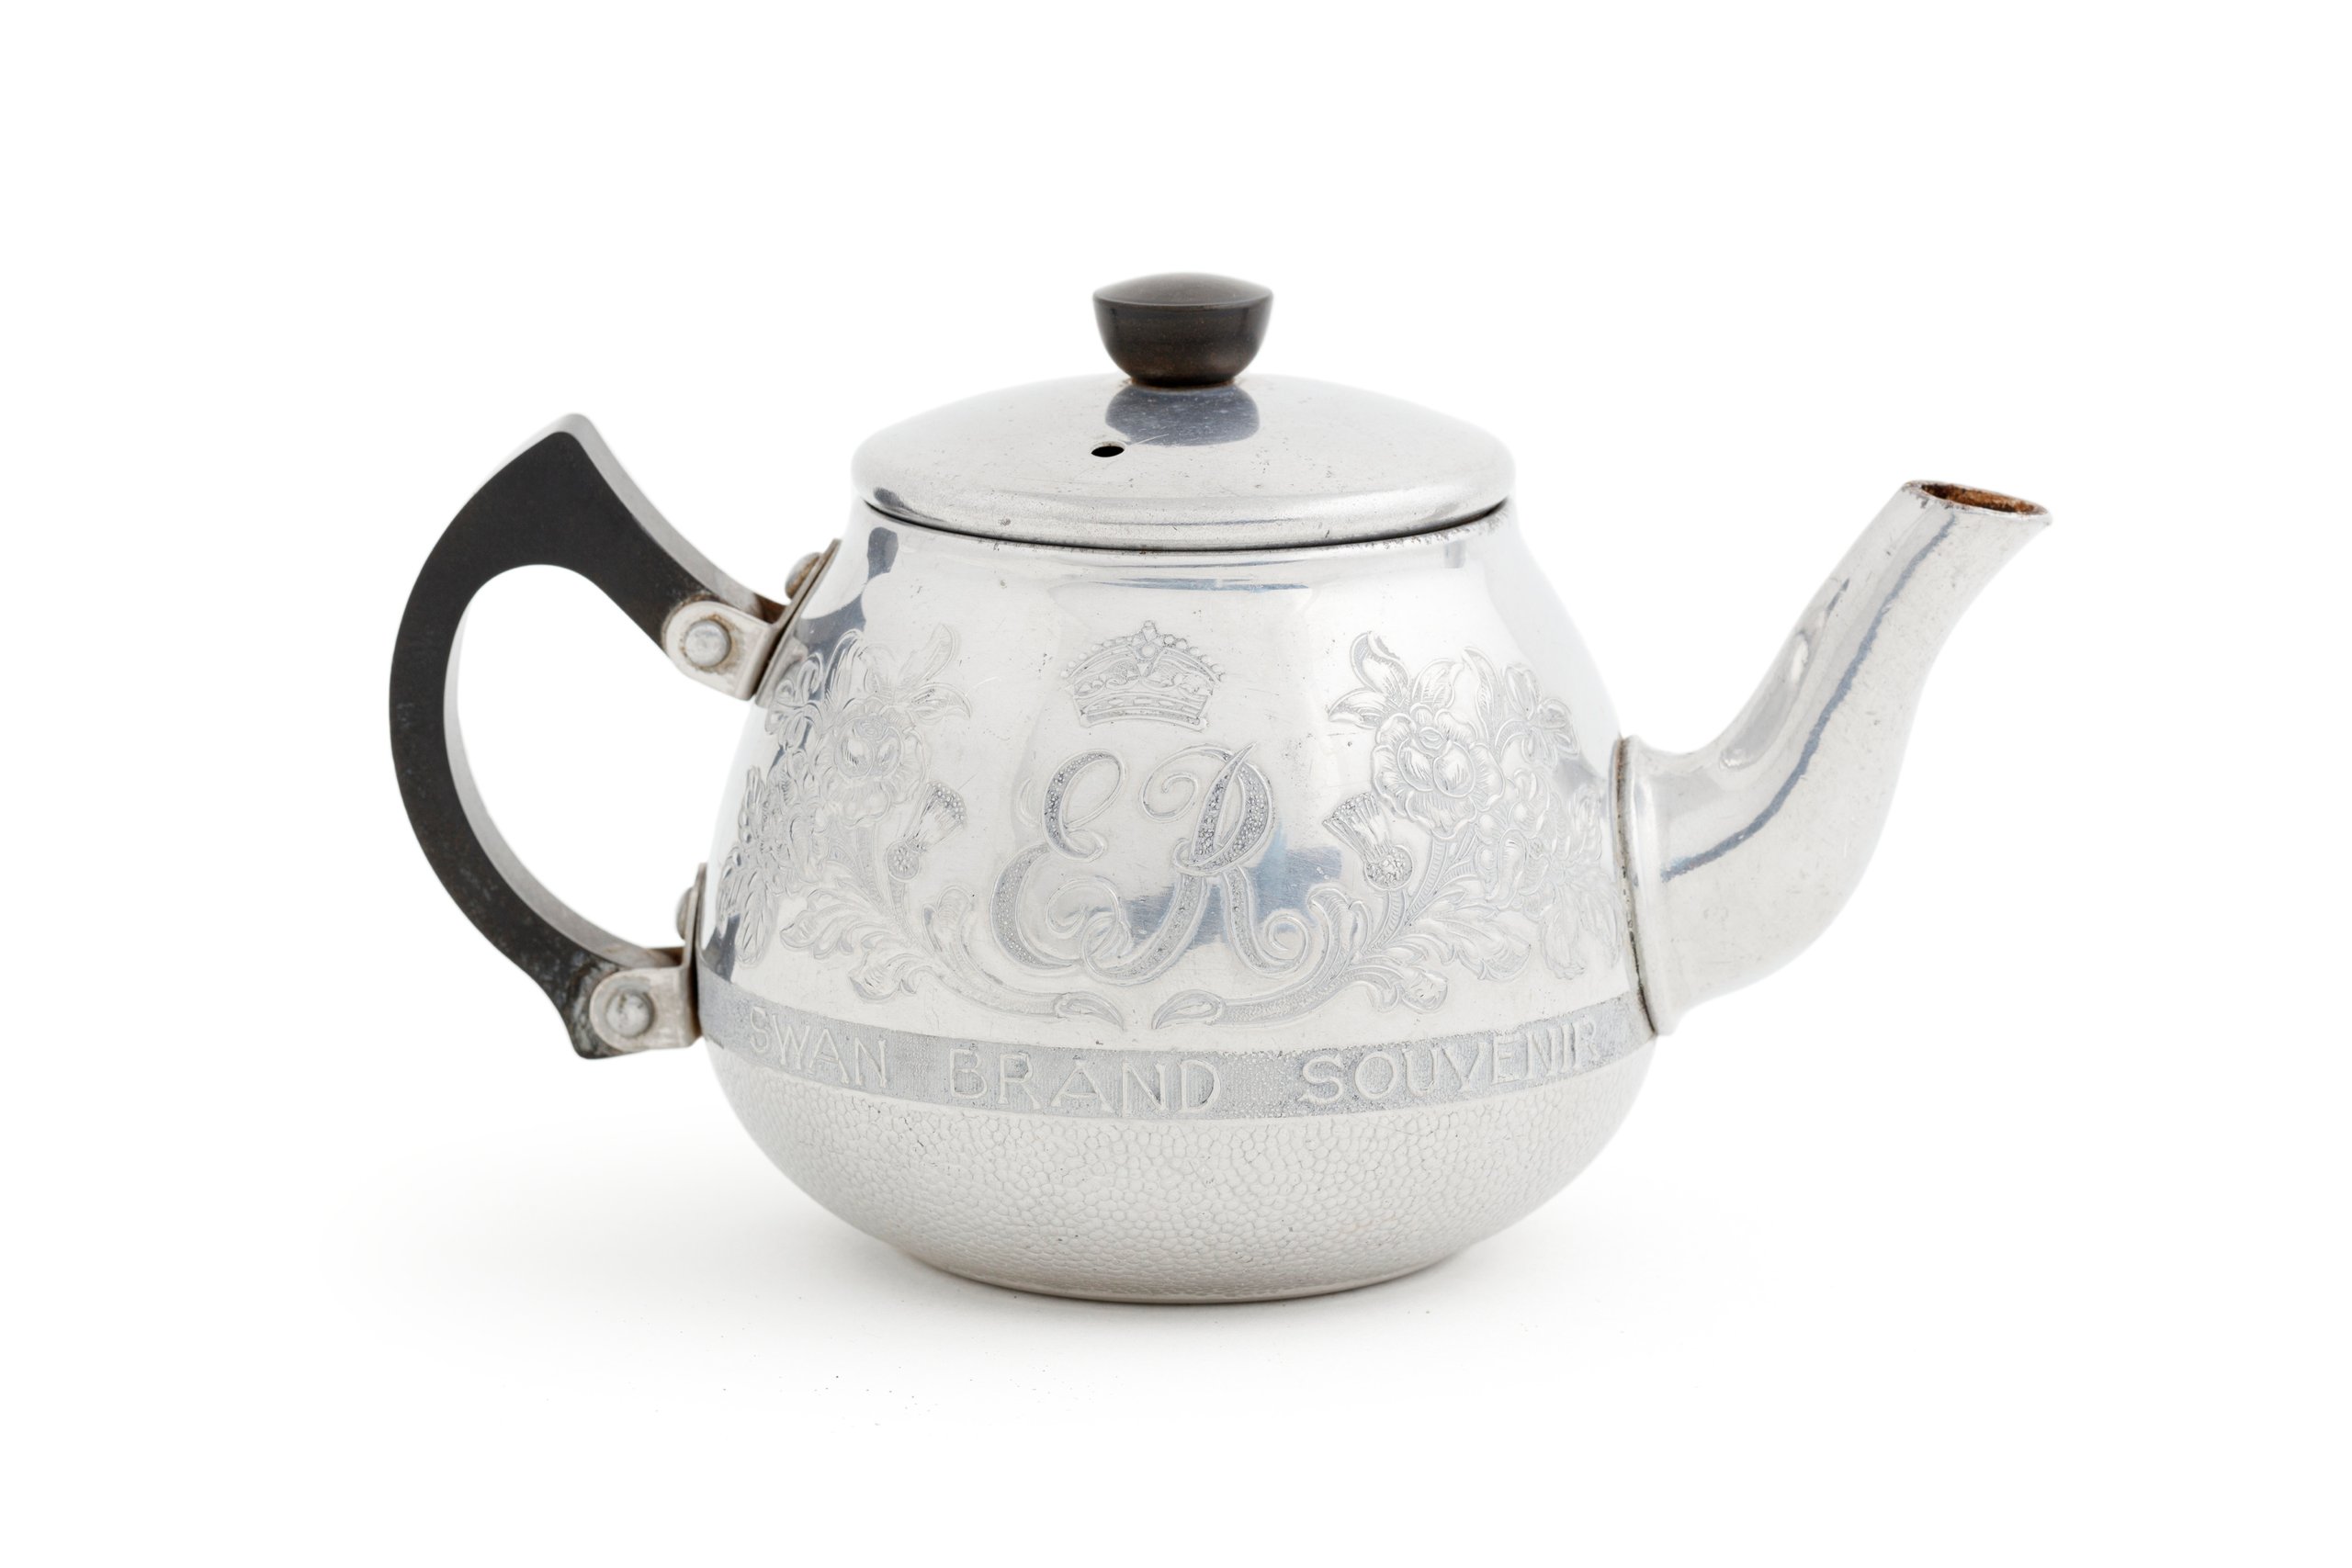 Aluminium teapot commemorating the royal visit to Australia